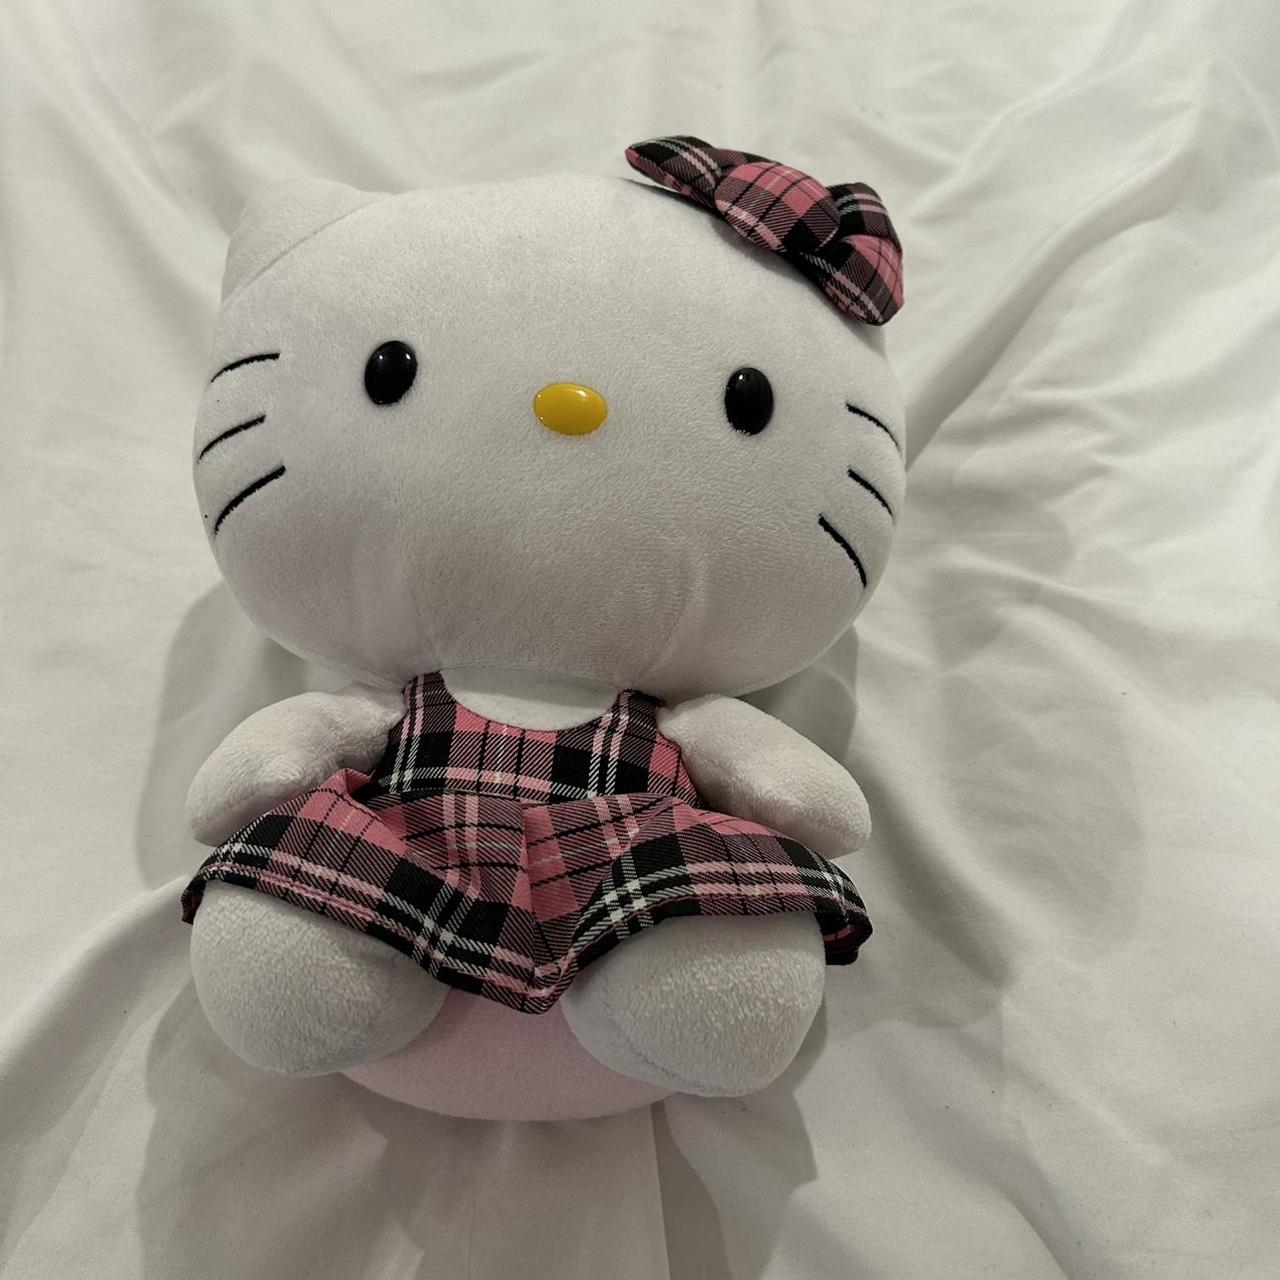 Ty Hello Kitty Plush 6” Stuffed Animal Pink Plaid Bow Dress Soft